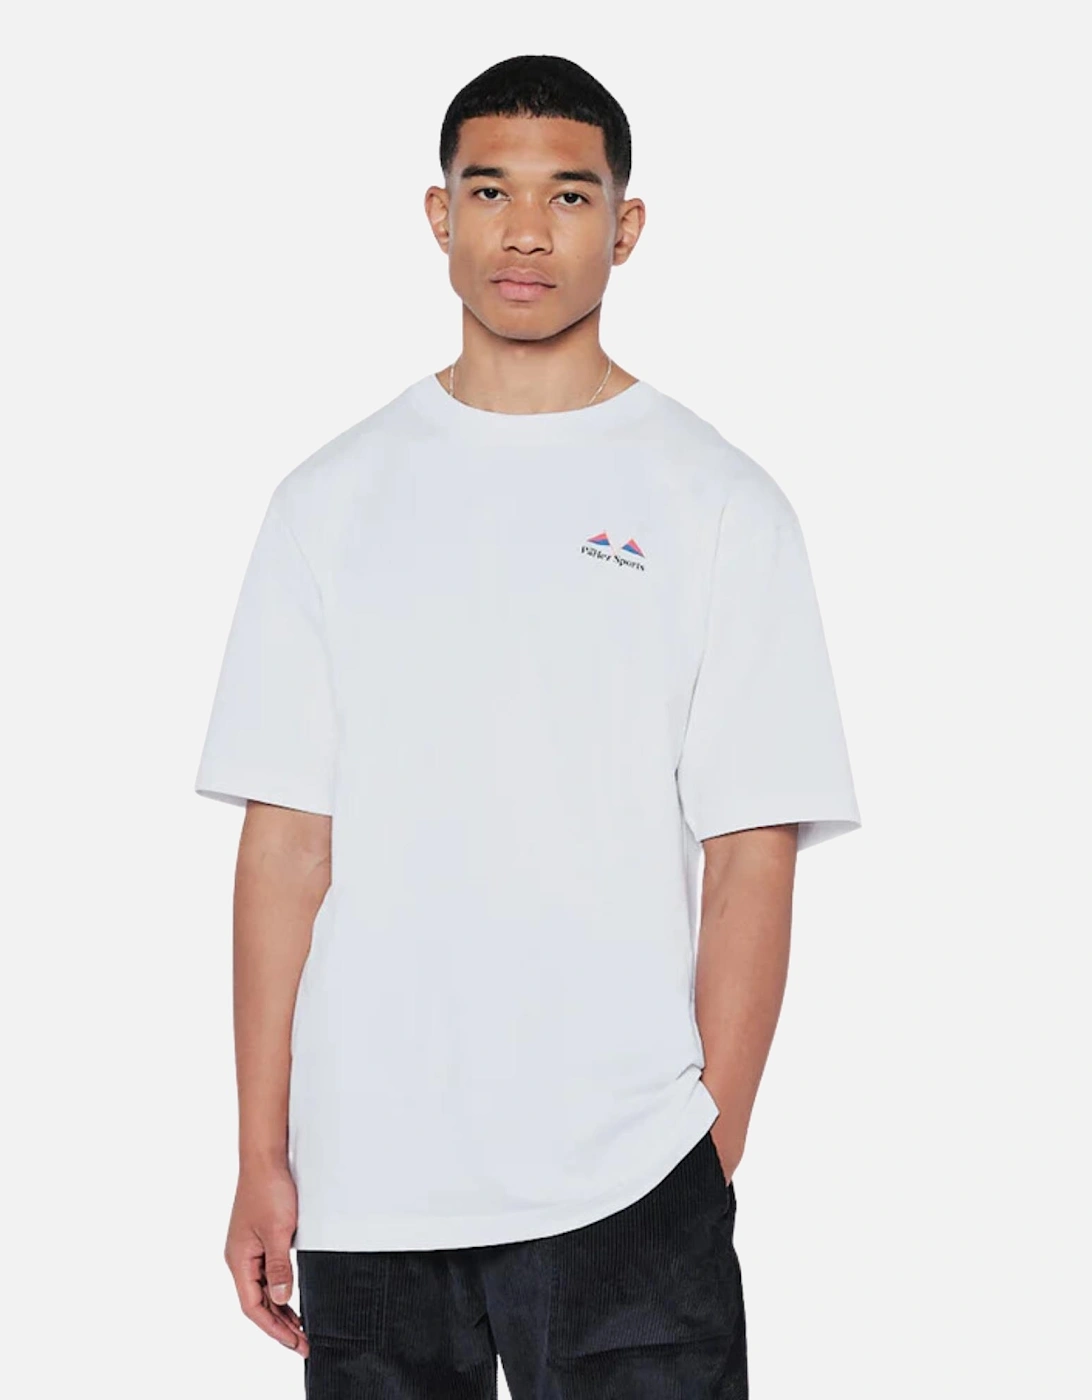 Yard T-Shirt - White